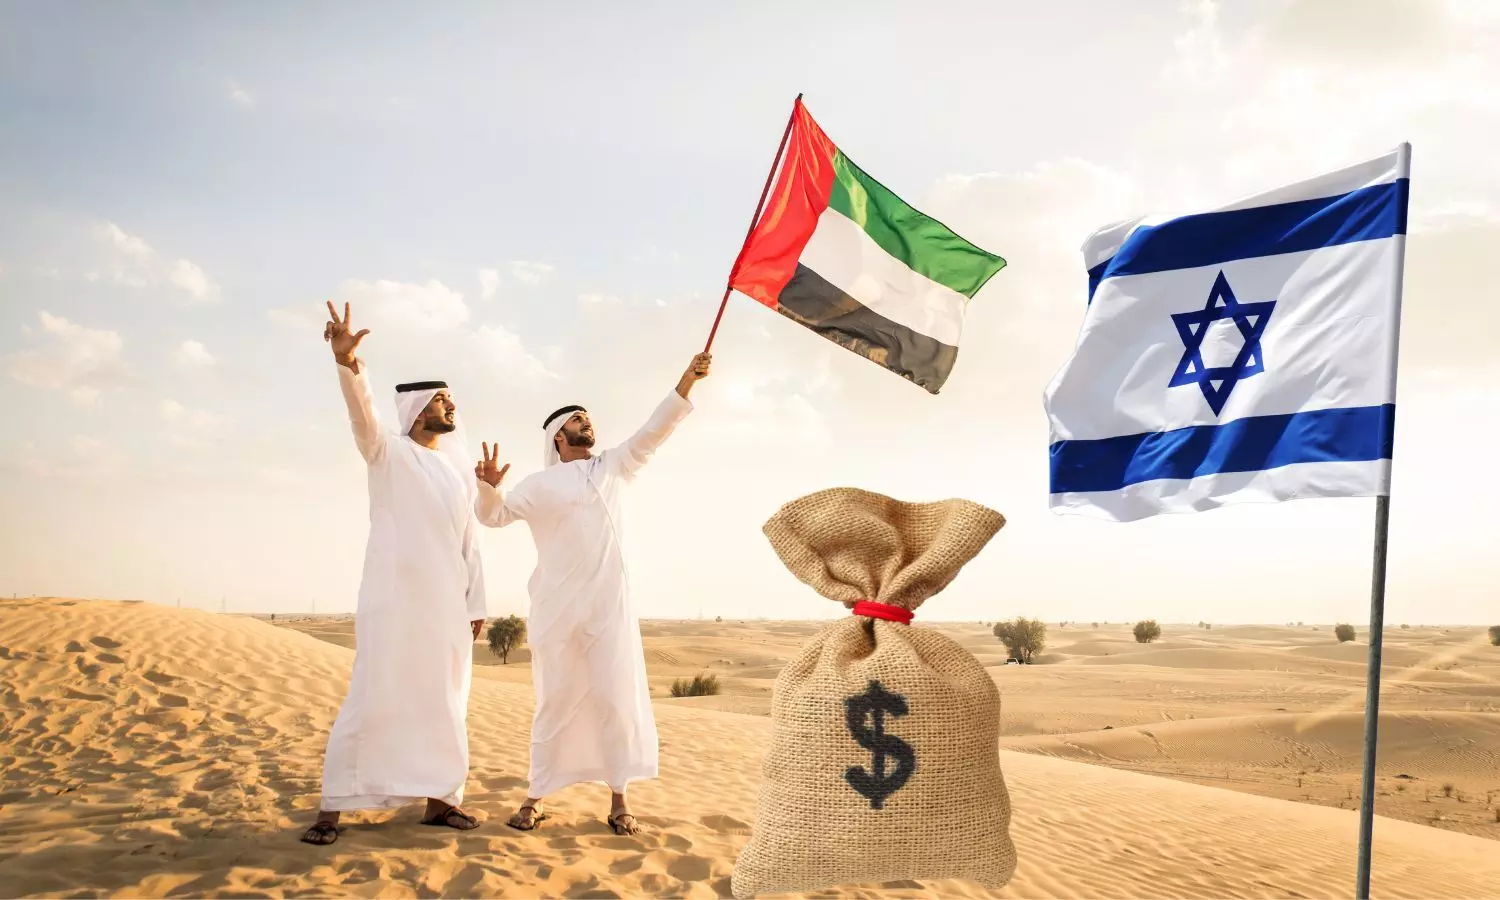 Israel Flag, 2 men with UAE Flag, Dollar sack